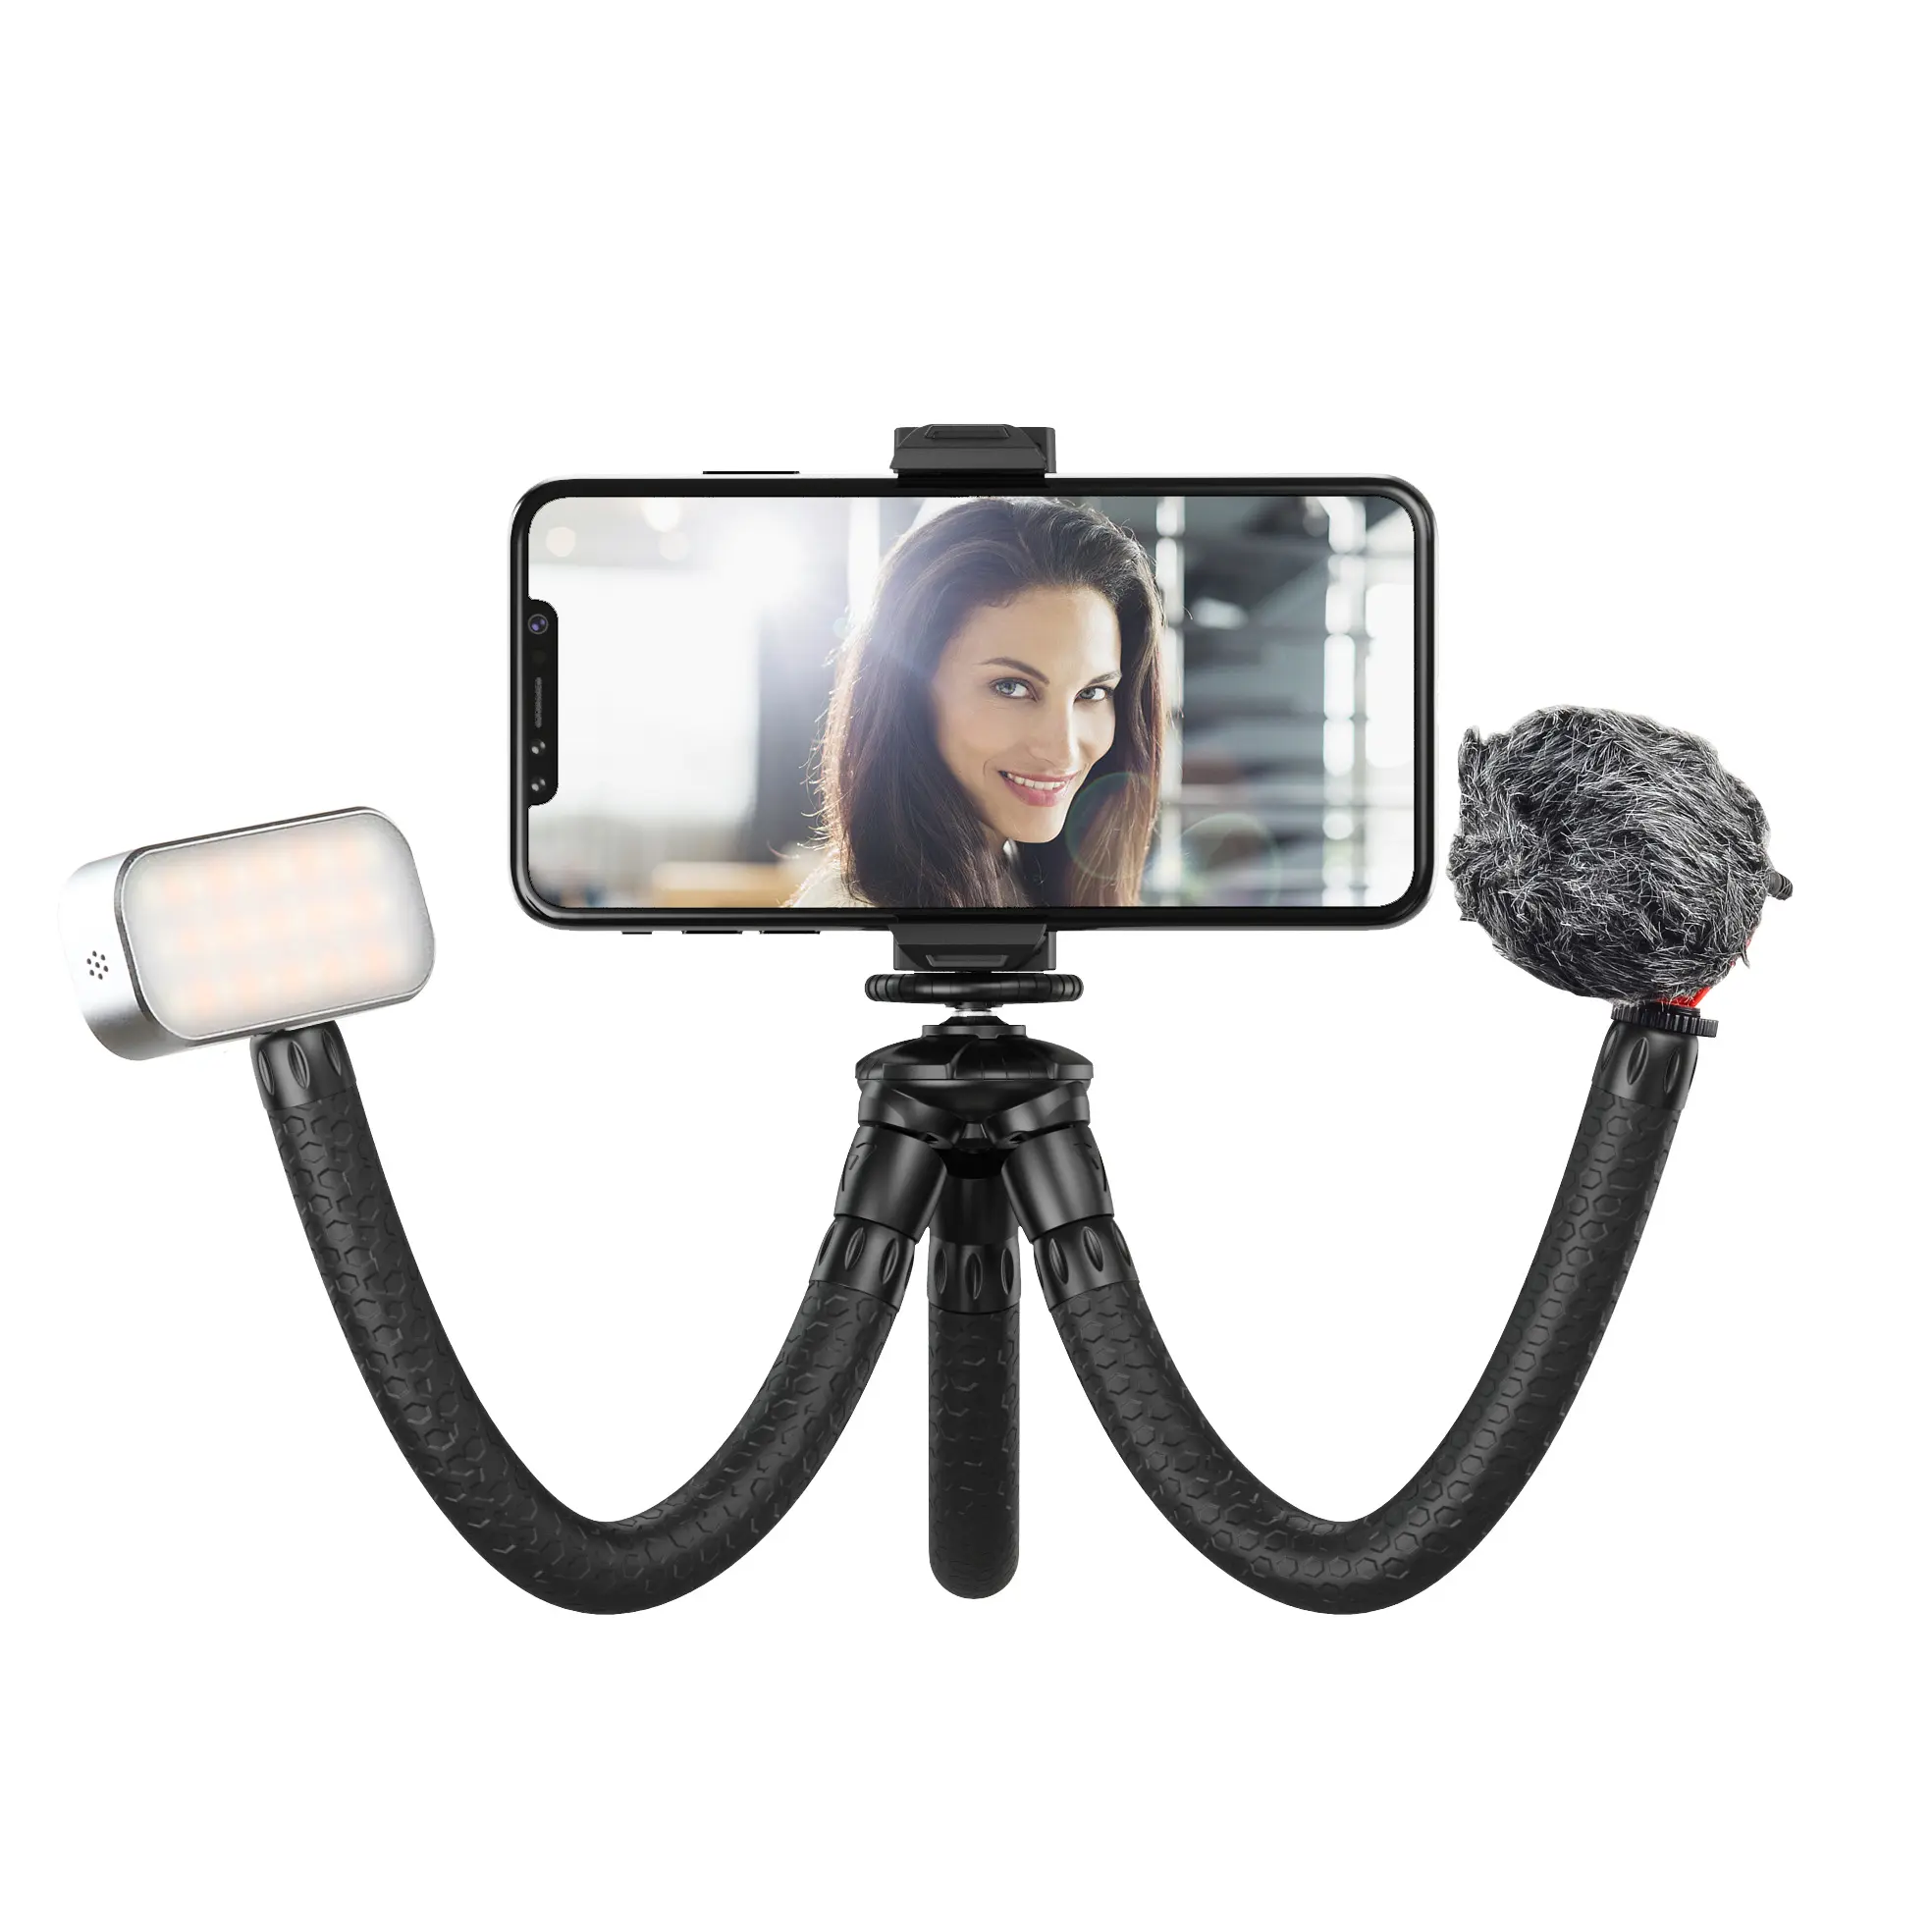 Portable Tripod Flexible Octopus Travel Mini Mobile Phone Tripod Bracket Monopod Selfie Stick For iPhone DSLR Camera Gopro